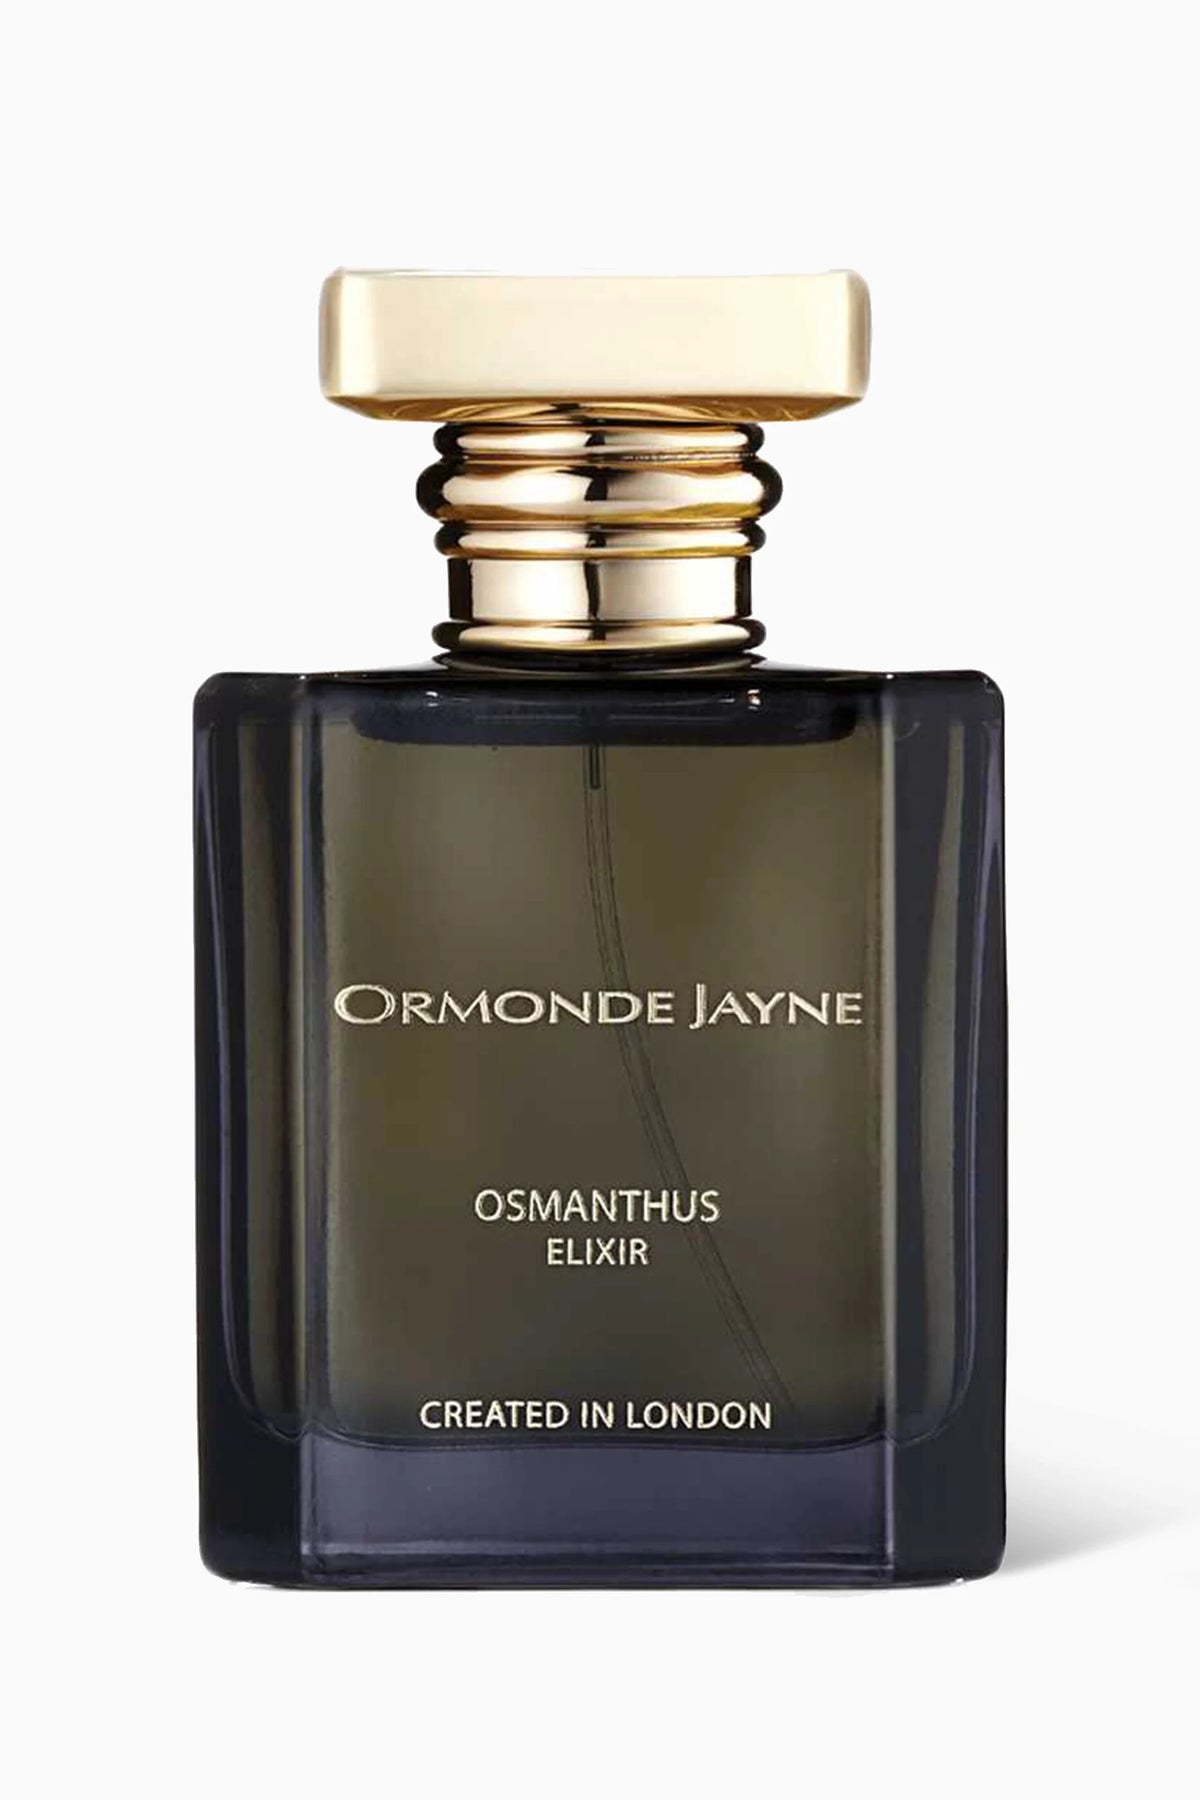 ORMONDE JAYNE Osmanthus Elixir Eau de Parfum 50ML - Niche Gallery